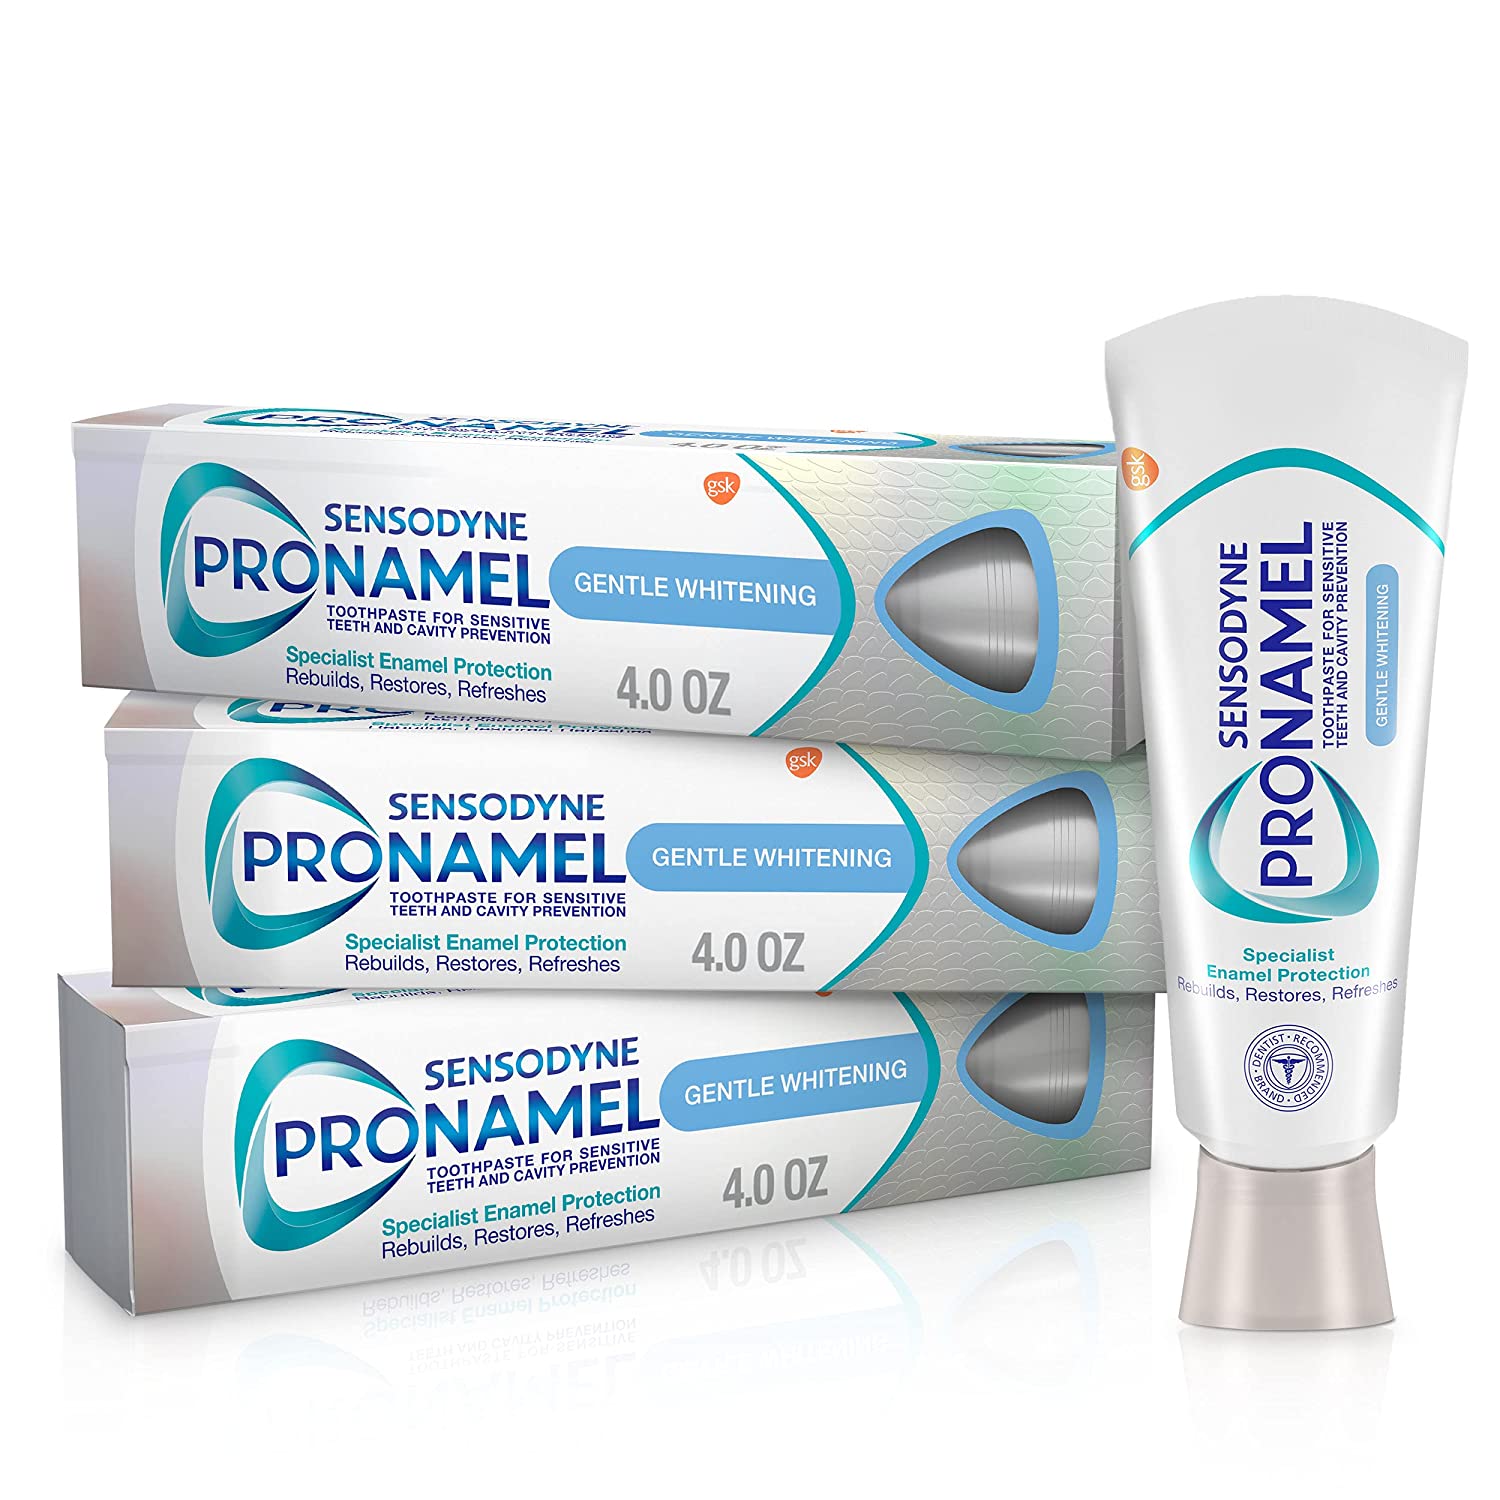 Sensodyne Pronamel Gentle Whitening Enamel Toothpaste for Sensitive Teeth - 4 Ounces (Pack of 3)- $10.79 YMMV at Amazon